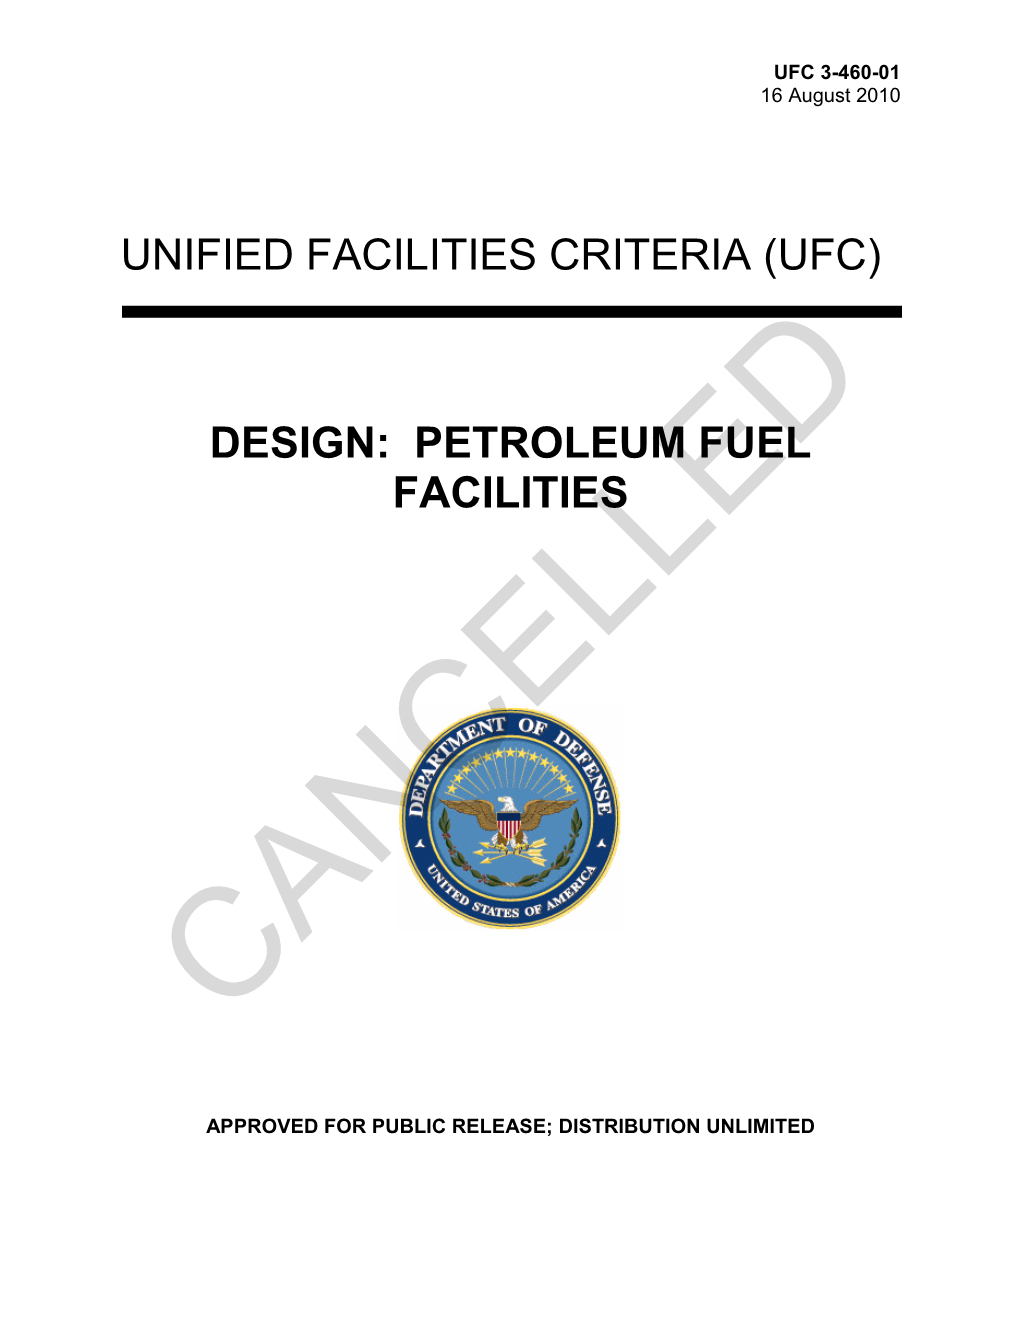 UFC 3-460-01 Design: Petroleum Fuel Facilities